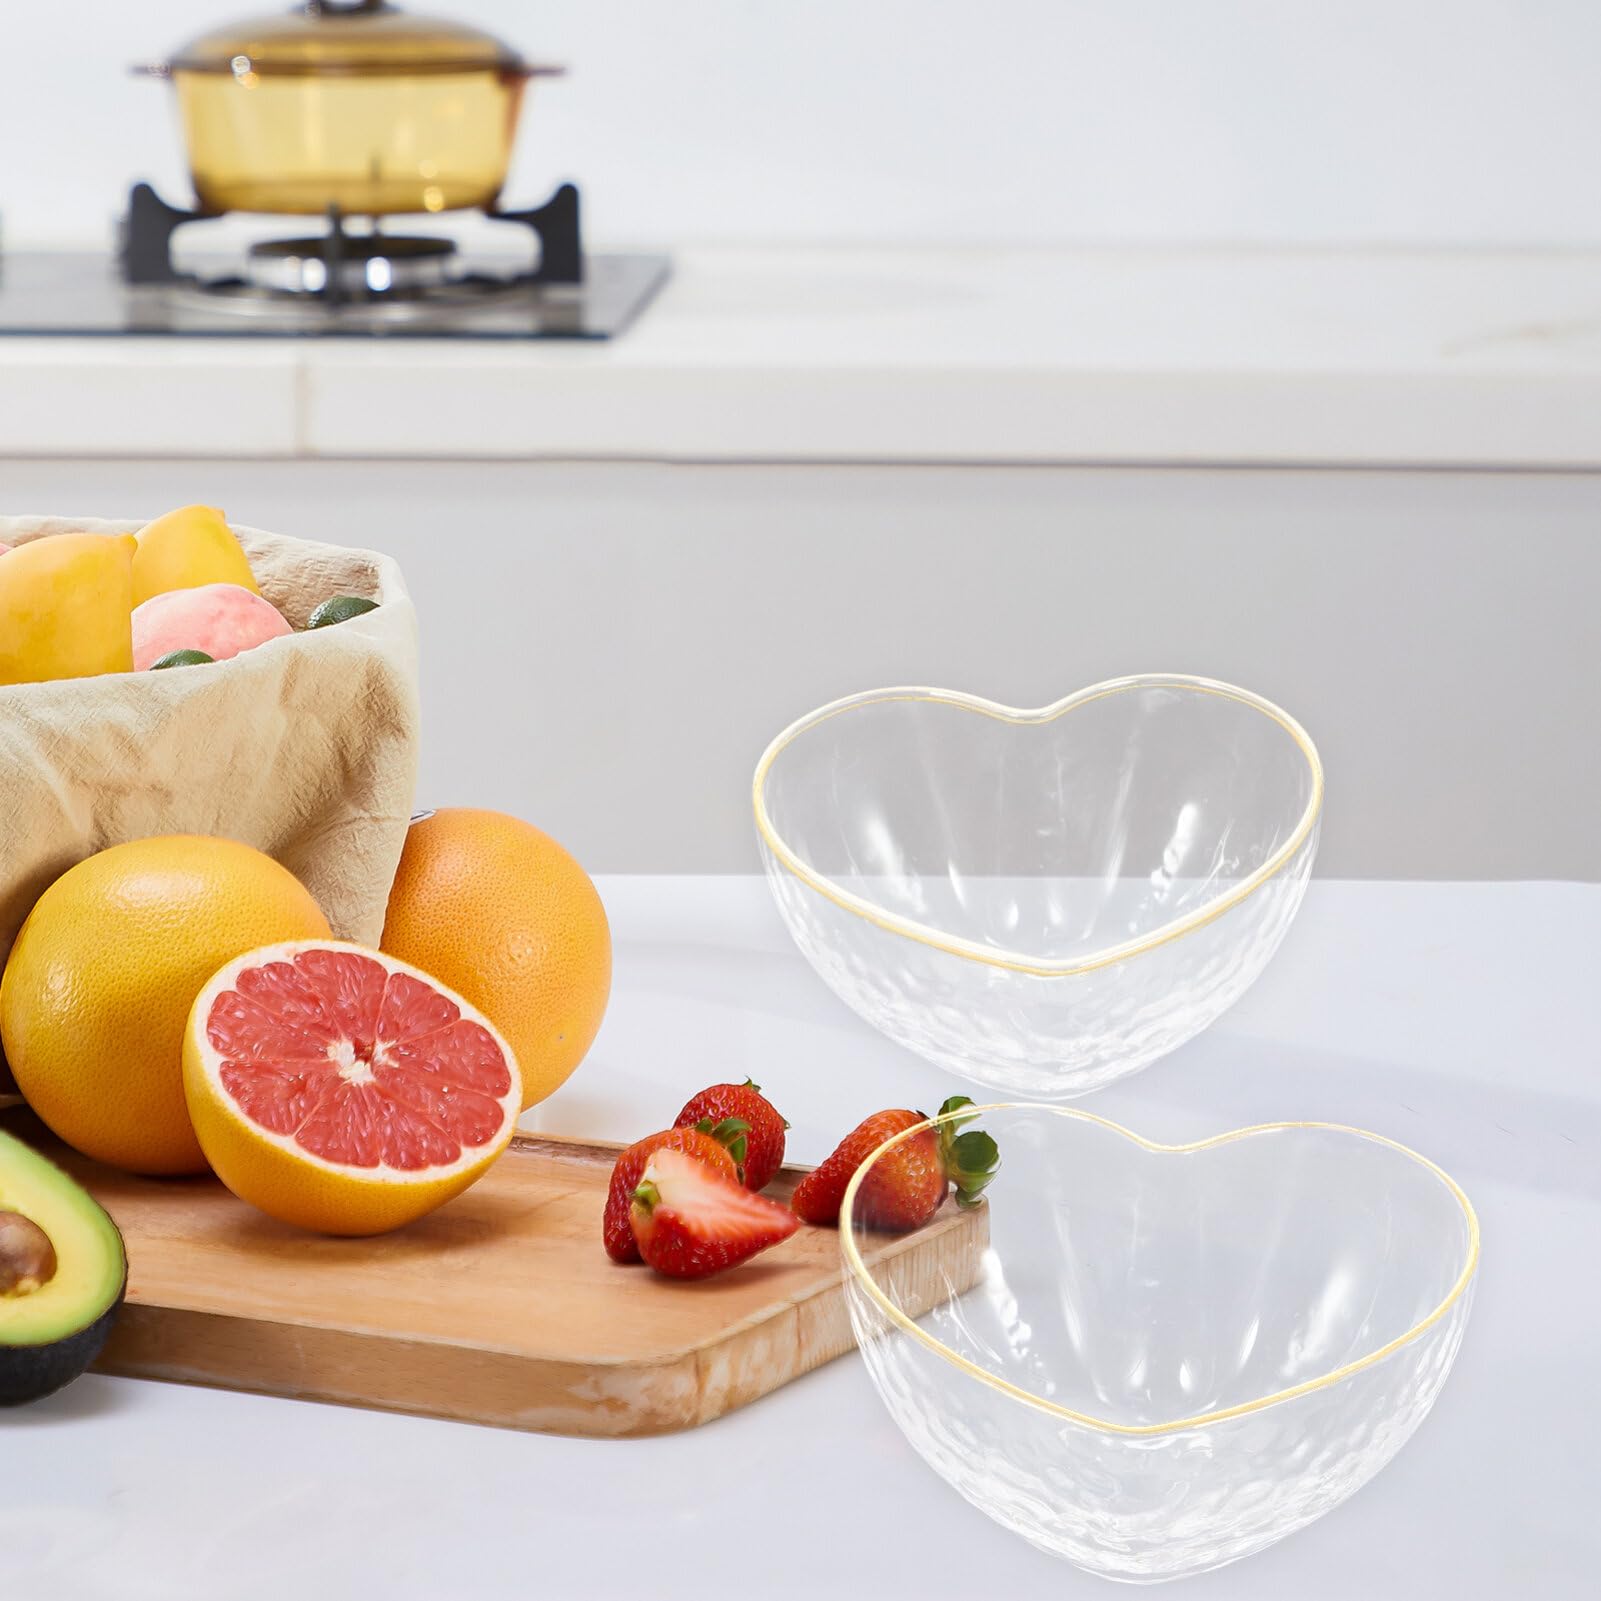 Luxshiny Glass Crystal Dessert Bowl Heart Bowl Salad Apetizer Serving Dish with Golden Trimming for Serving Fruit Salad Snack